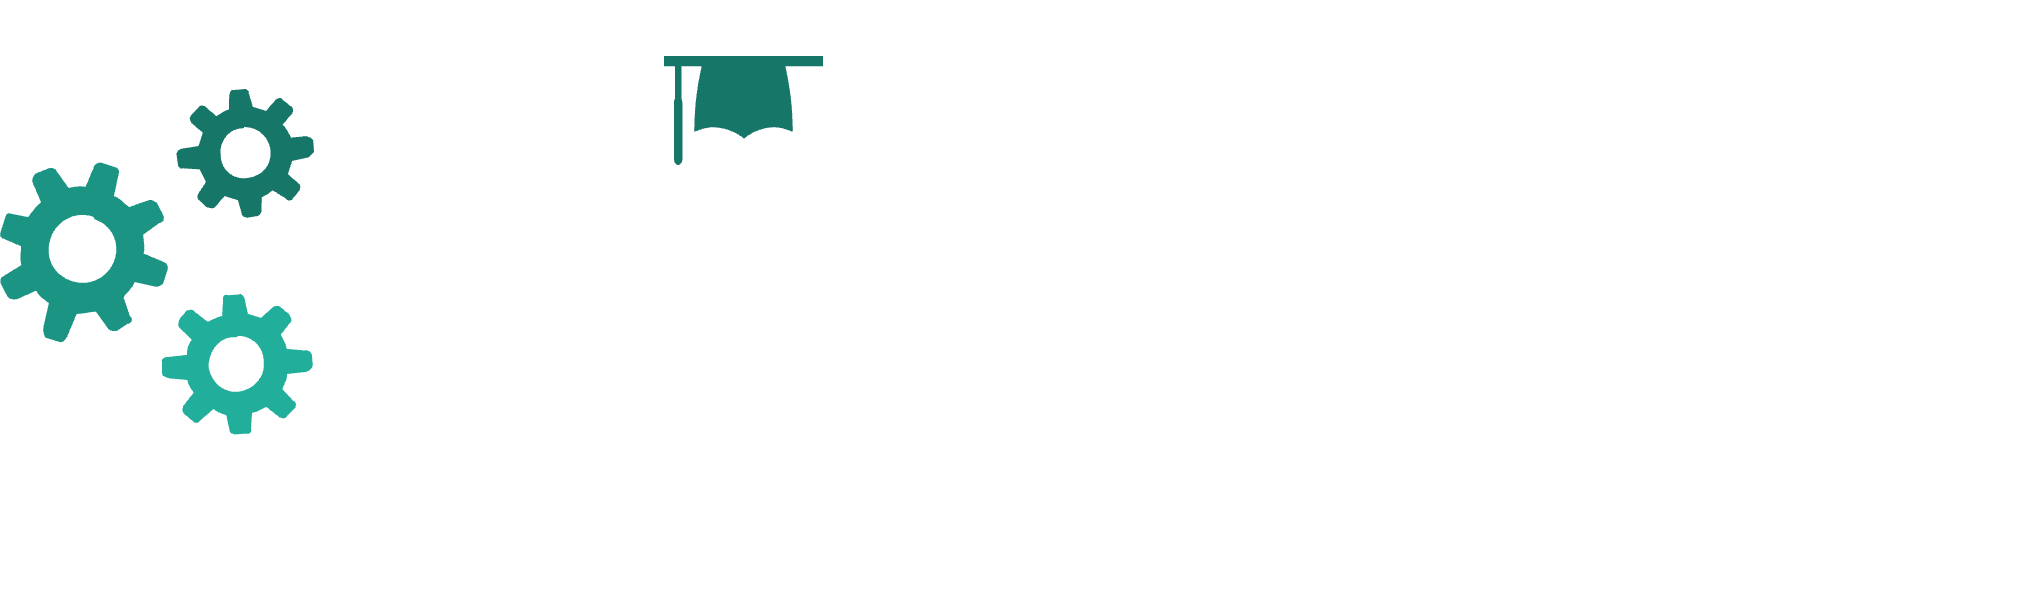 knowledge hub